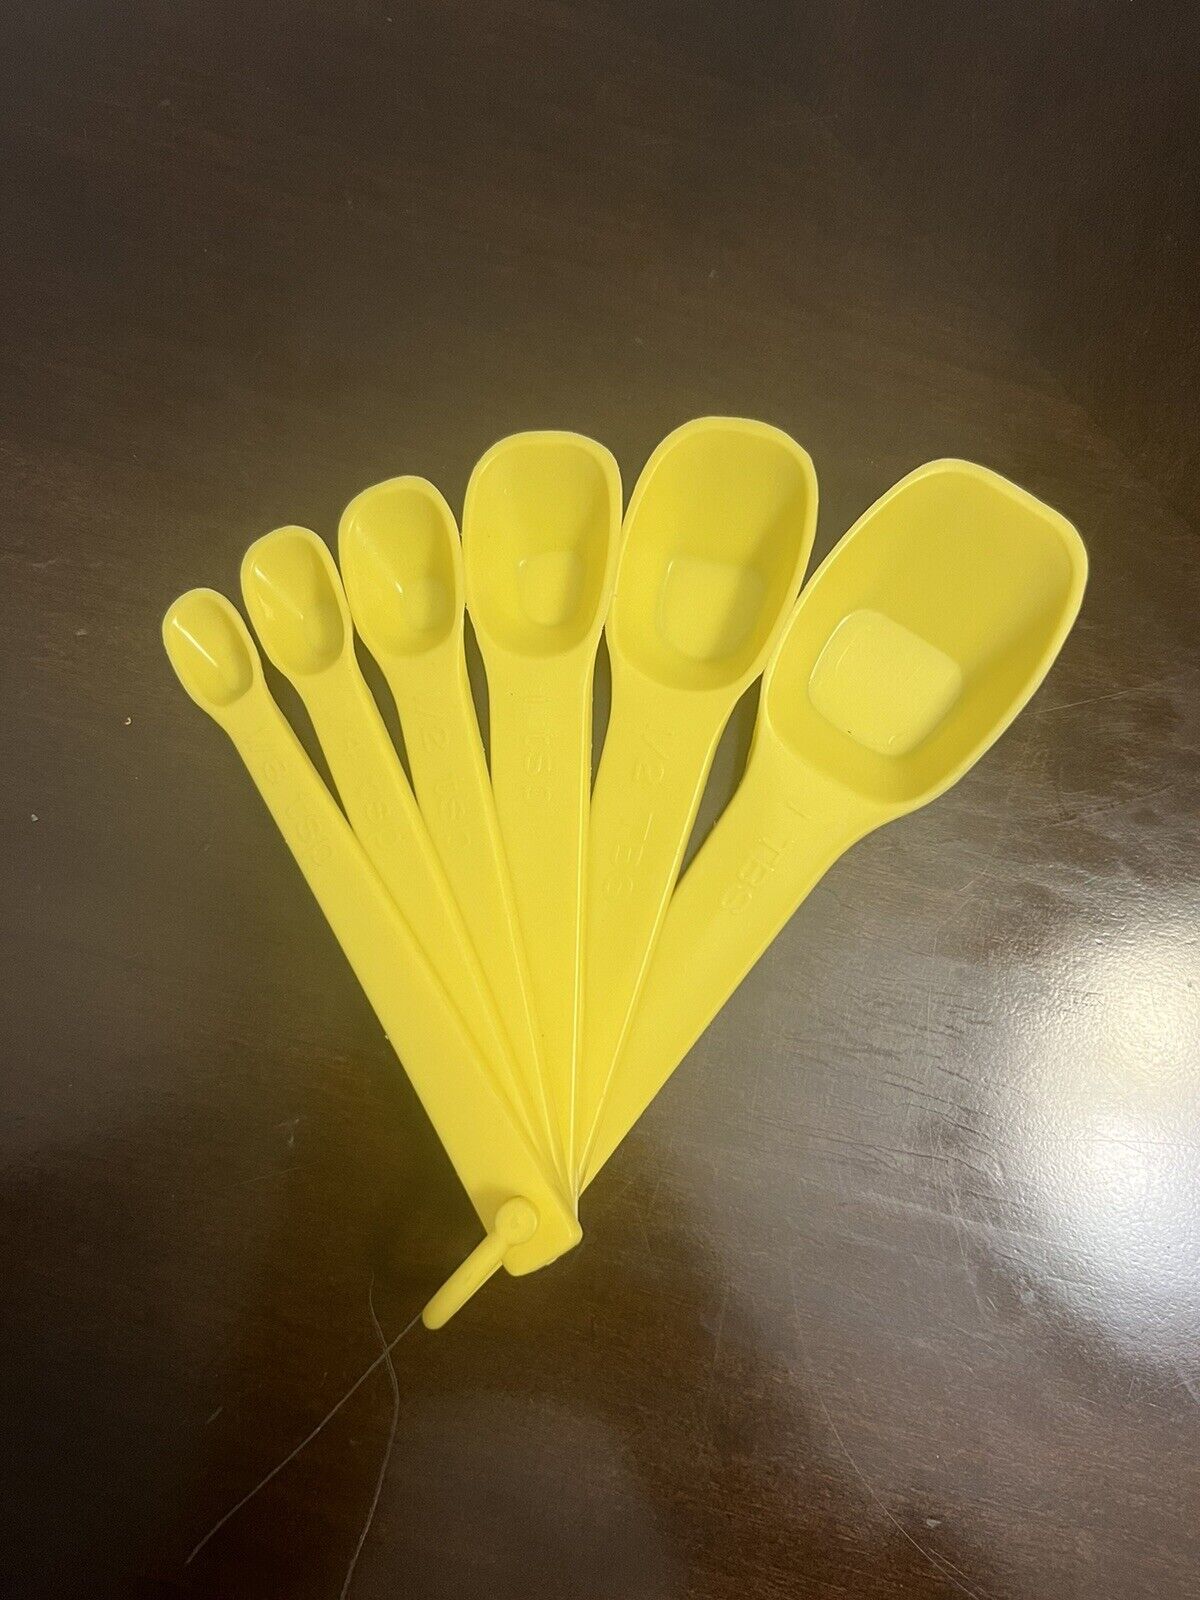 Vintage Rubbermaid Nesting Measuring Spoons #2231-2236 Yellow Set Of 6